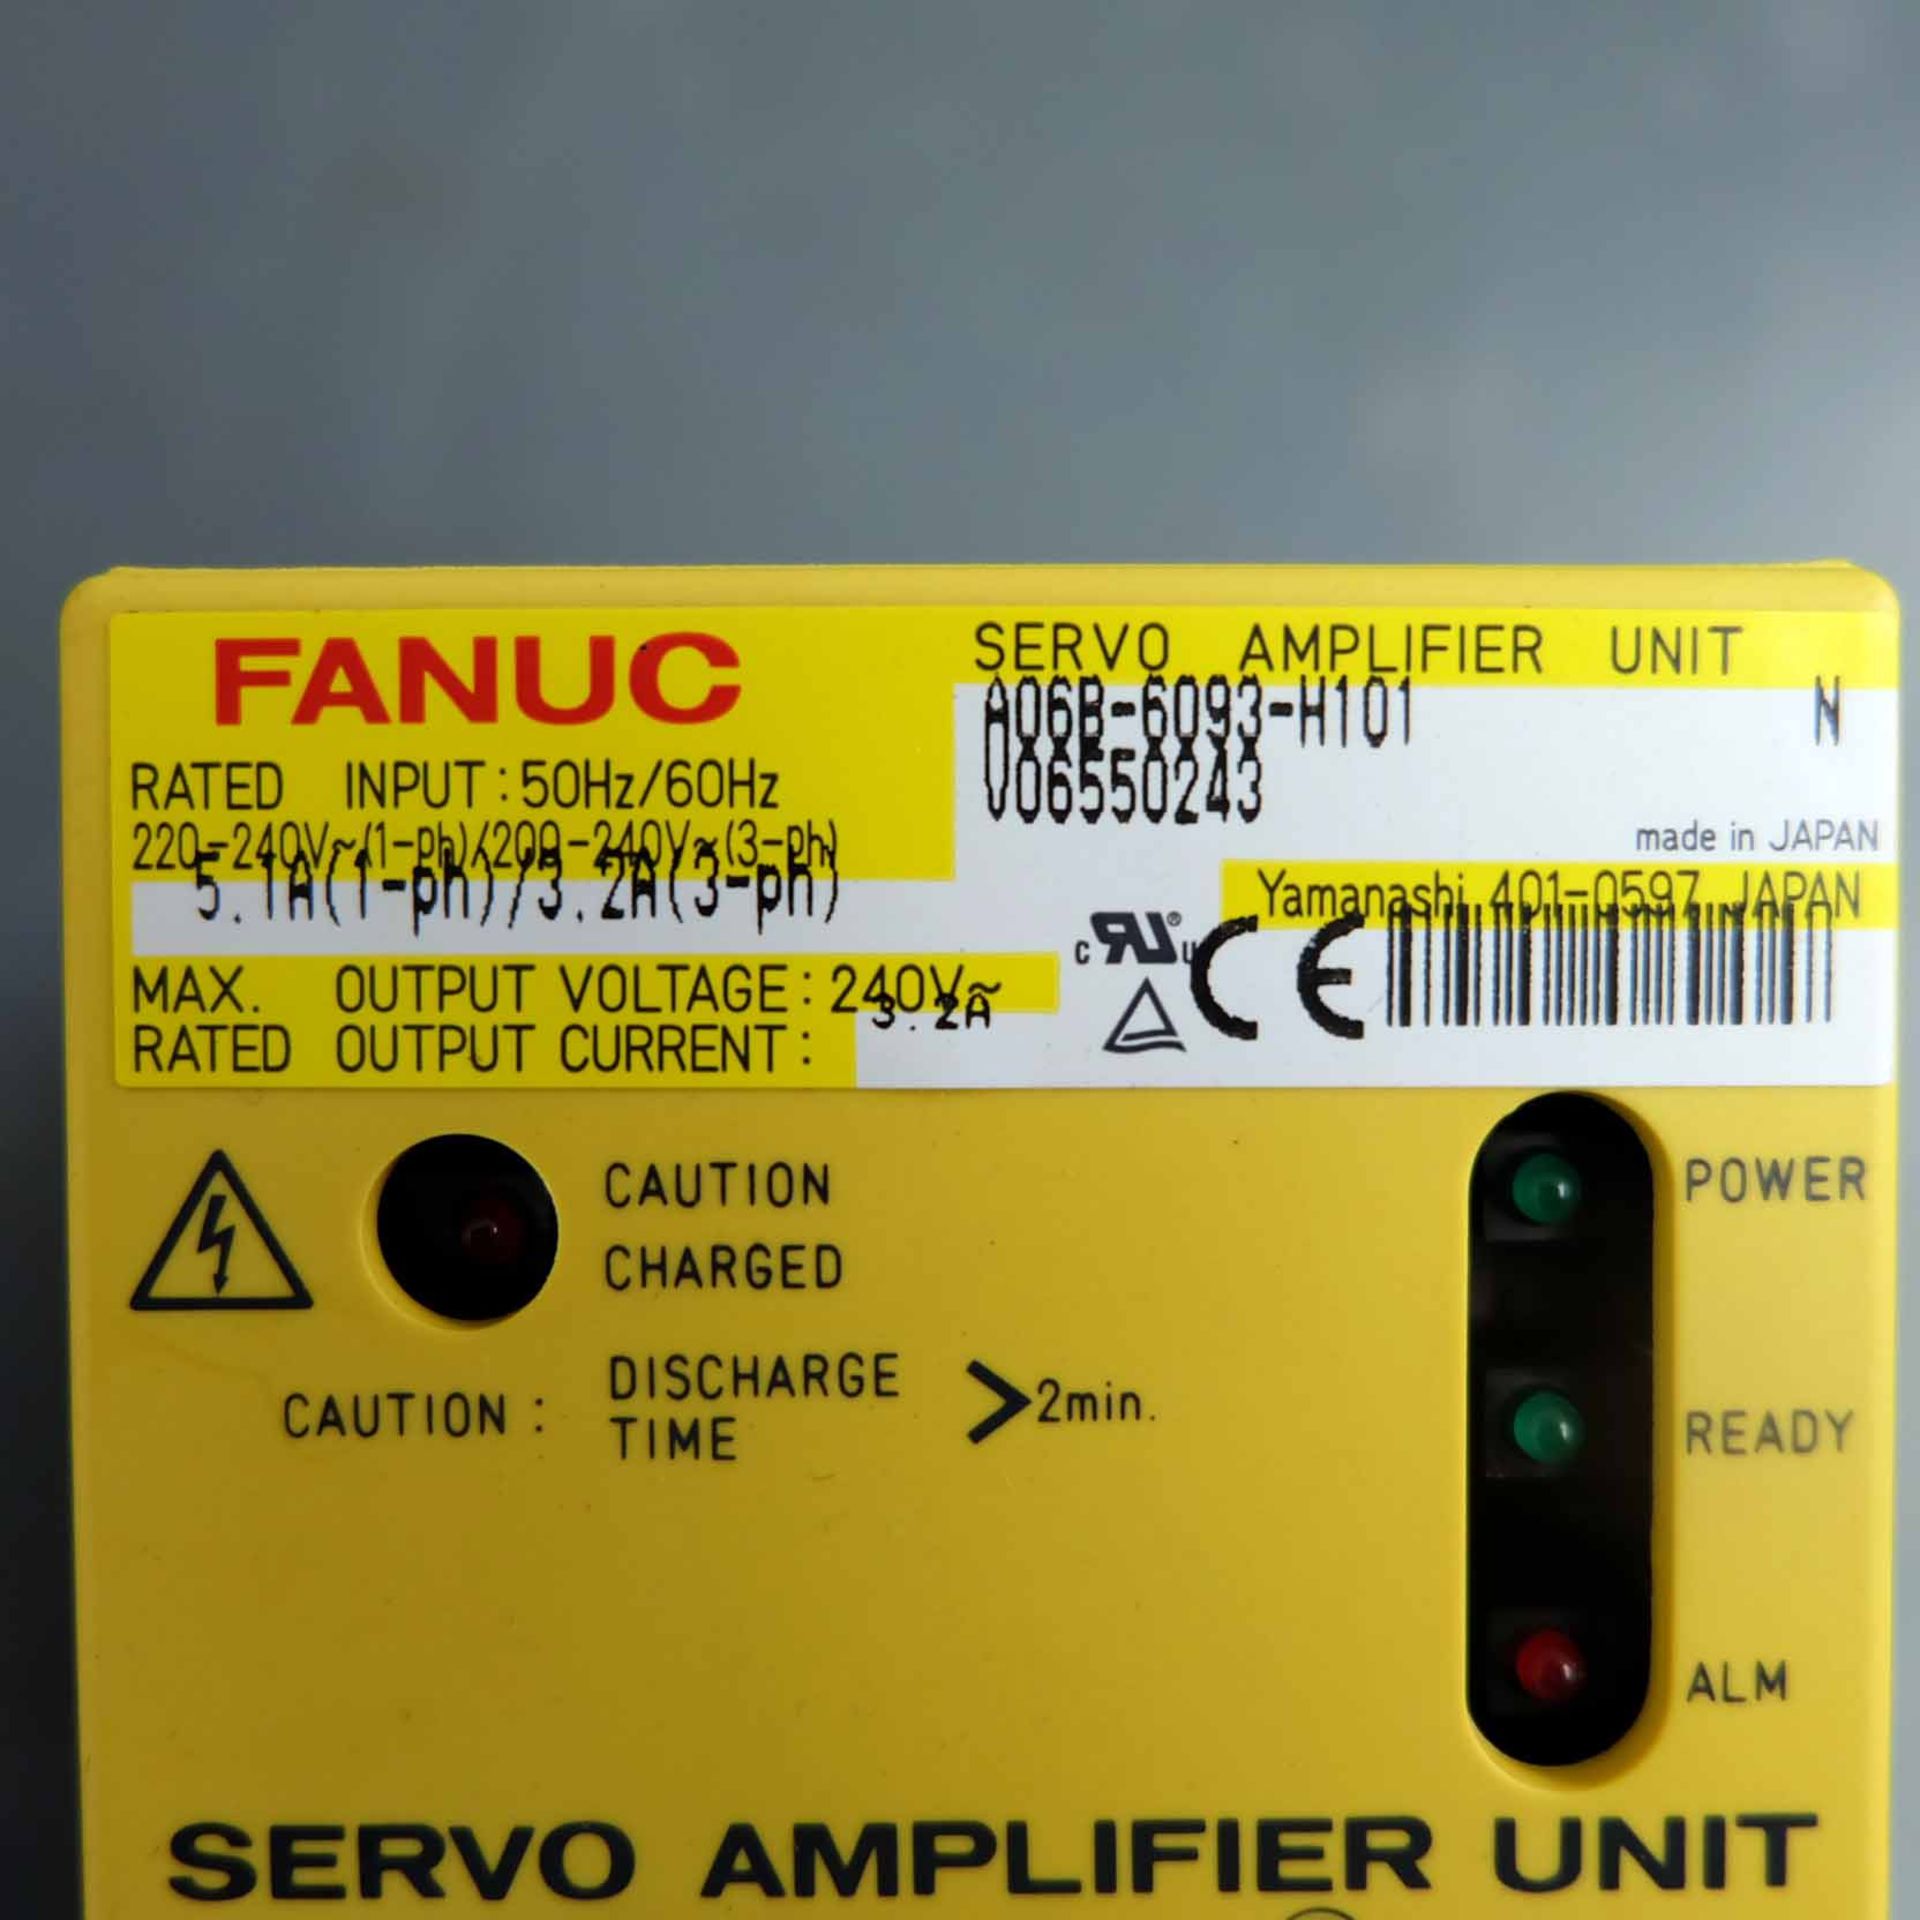 Fanuc Semo Amplifier Unit. B Series. AO6B-6093-H101. SVU 1 - 12. Input 200-240 Volt. PWM Interface. - Image 3 of 7